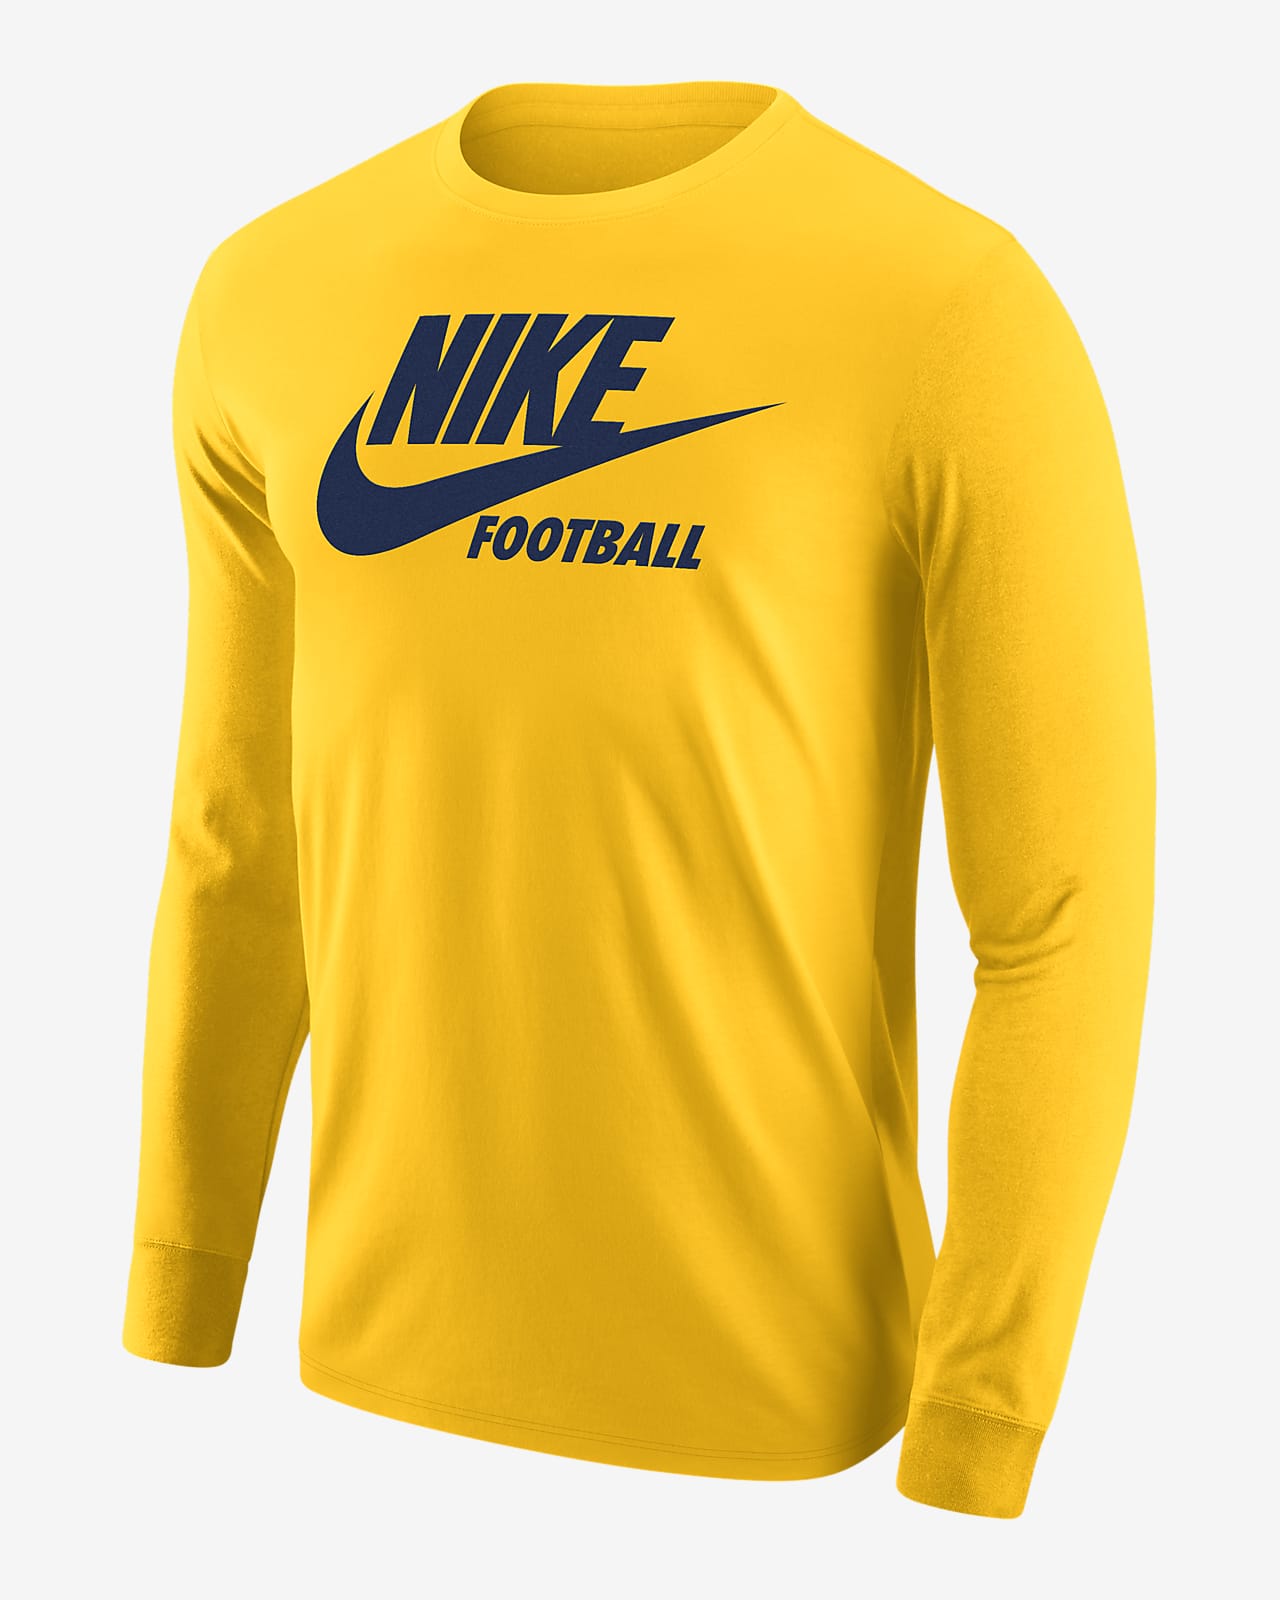 Nike Football Men's Long-Sleeve T-Shirt